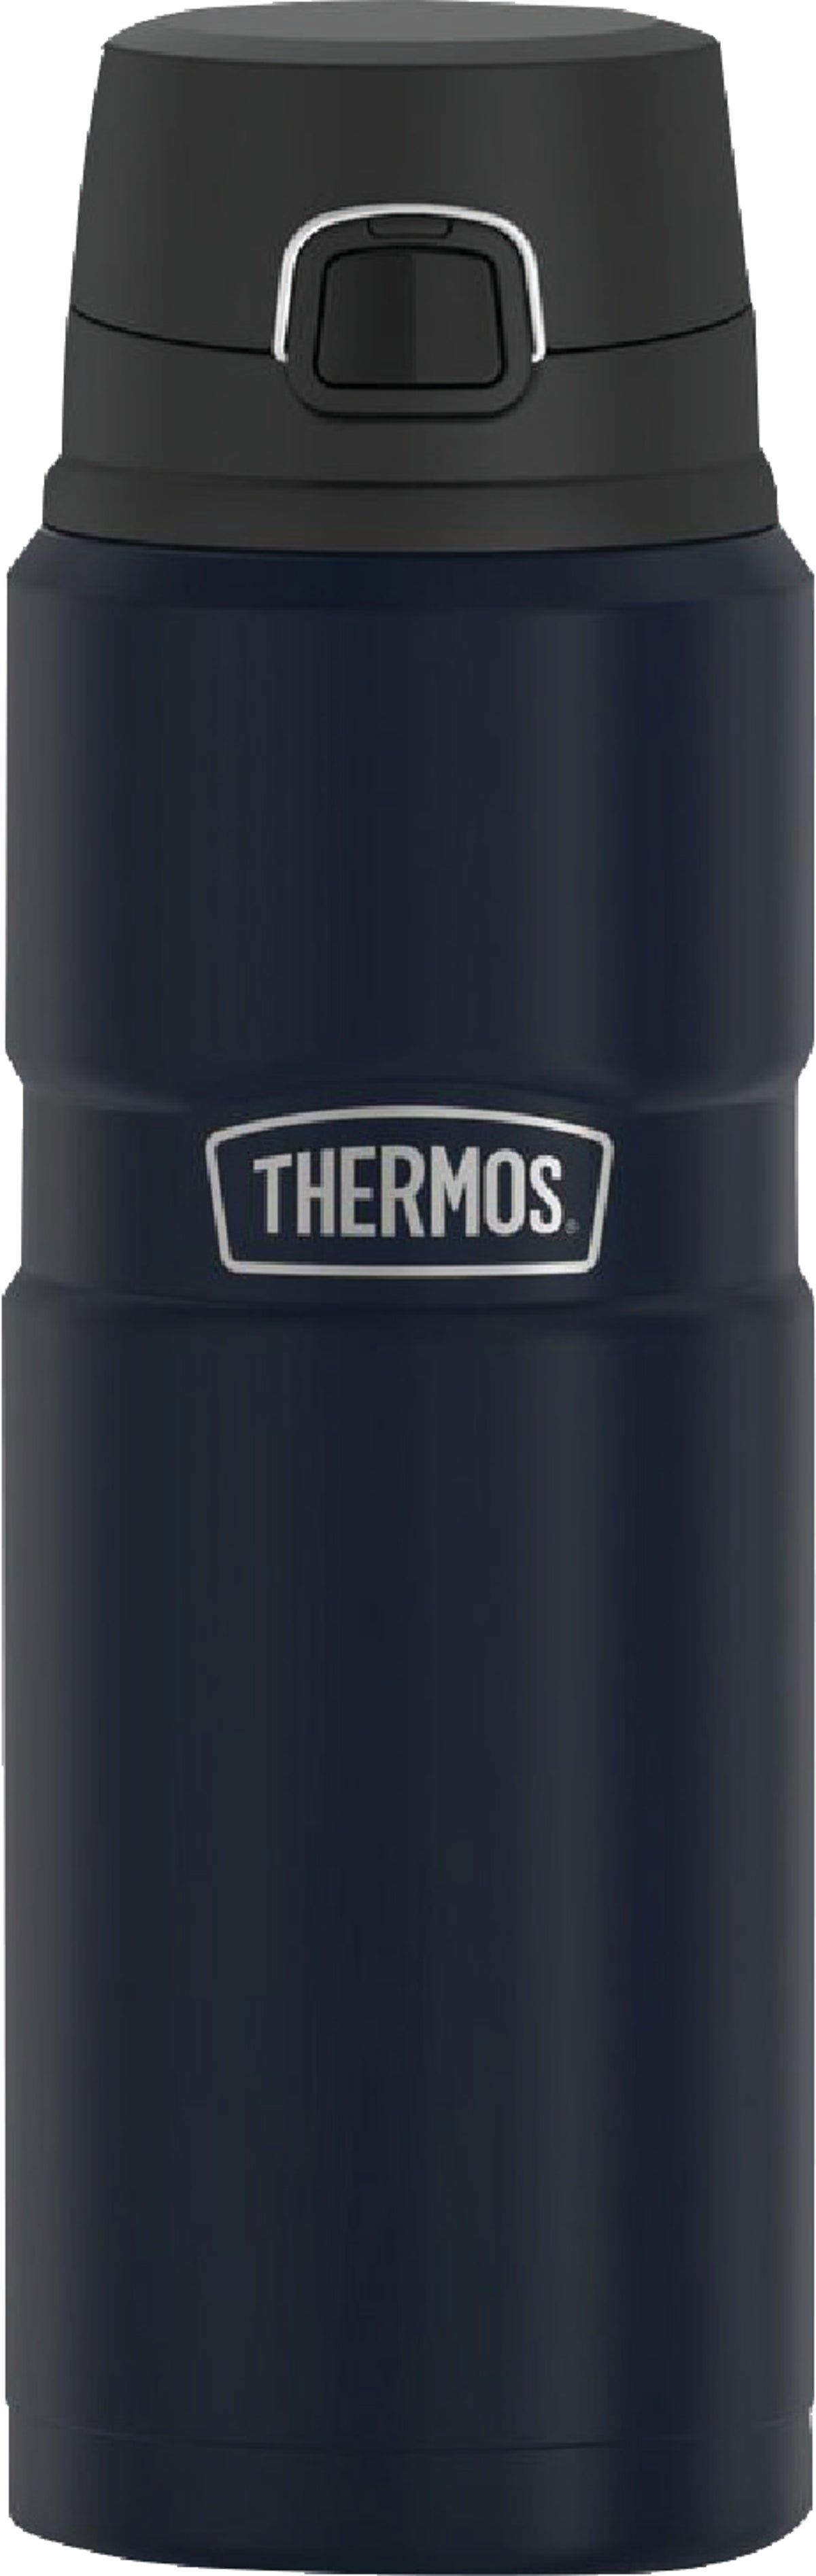 Sarge - Big T - Thermos, 40 oz, Blue